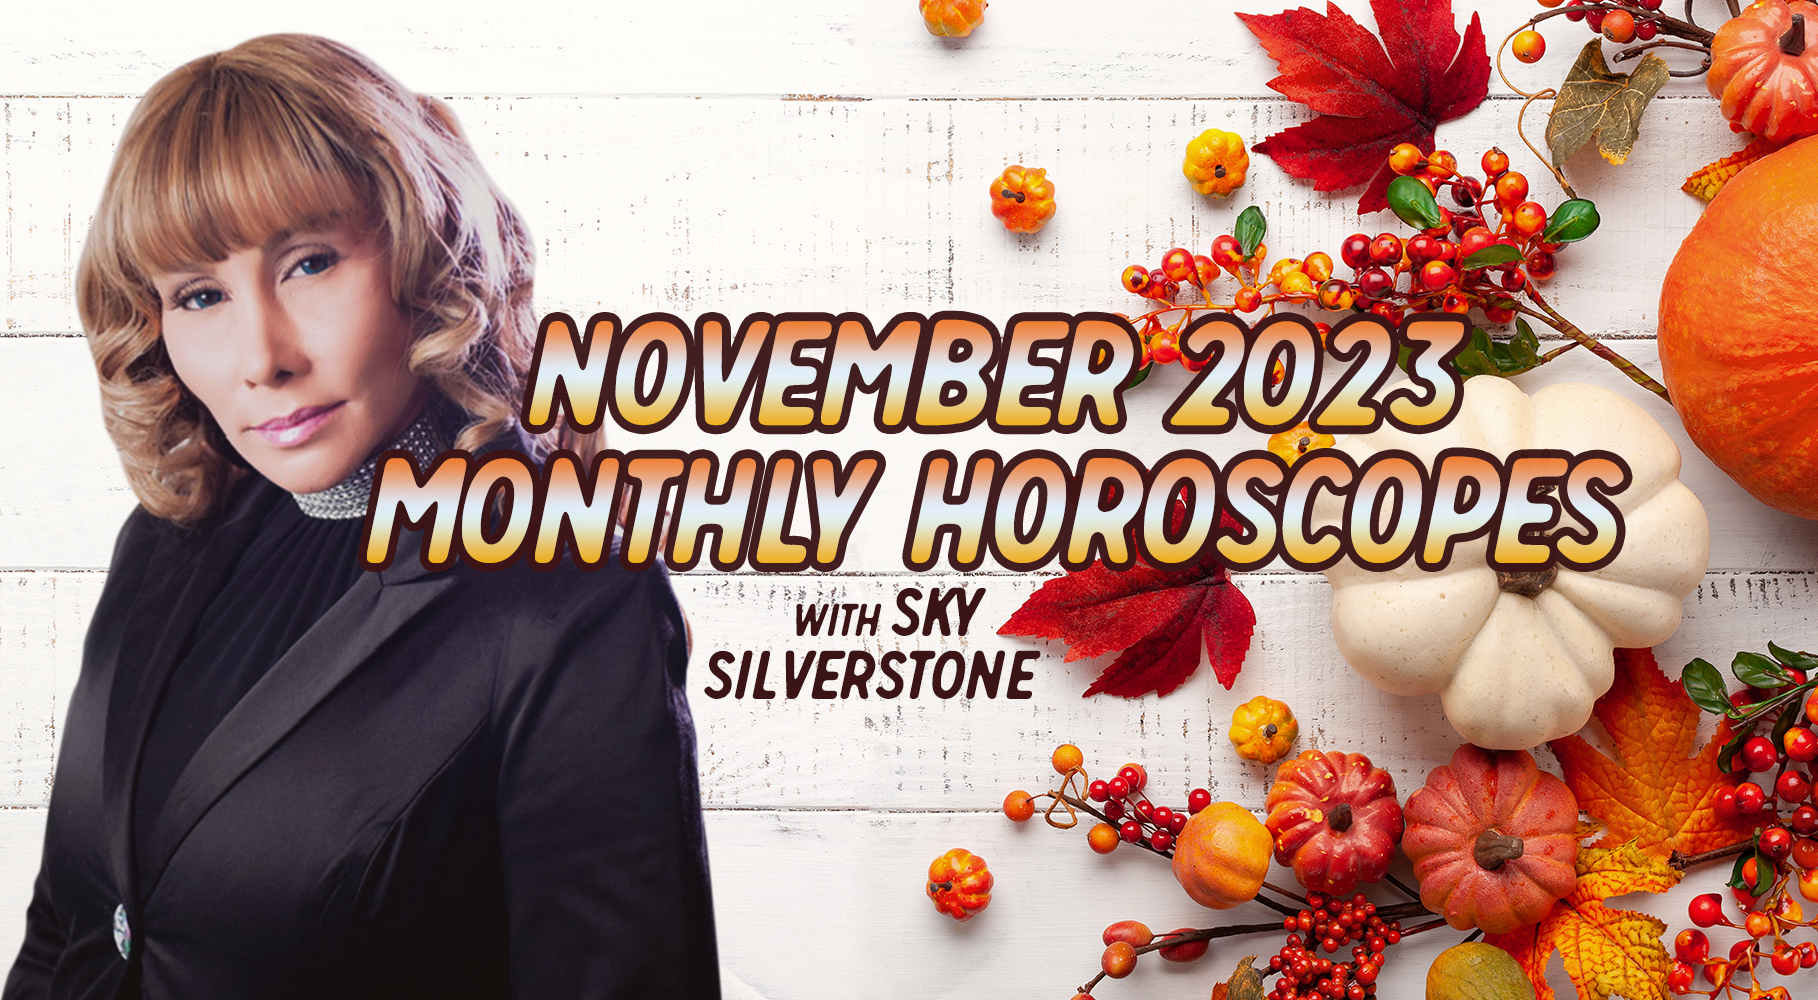 November 2023 Monthly Horoscopes